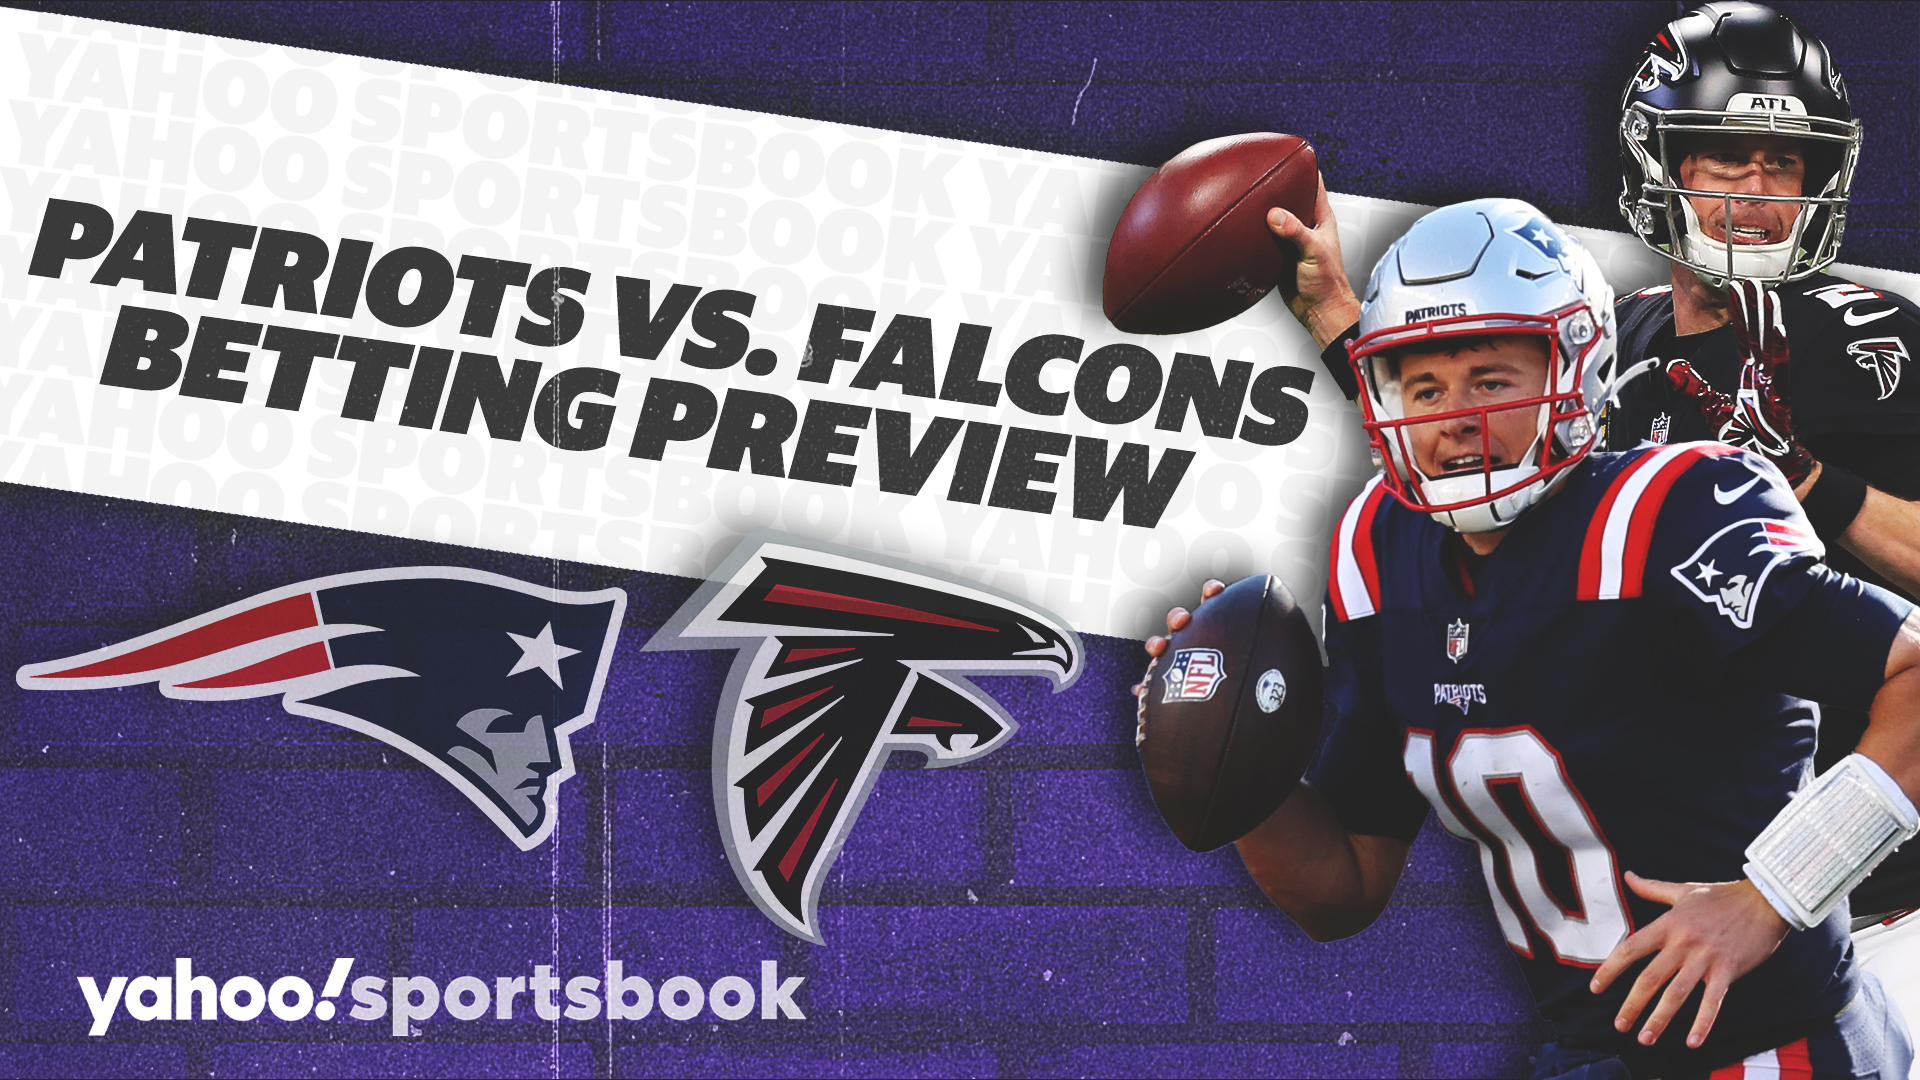 Betting: Will Patriots cover -7 vs. Falcons?